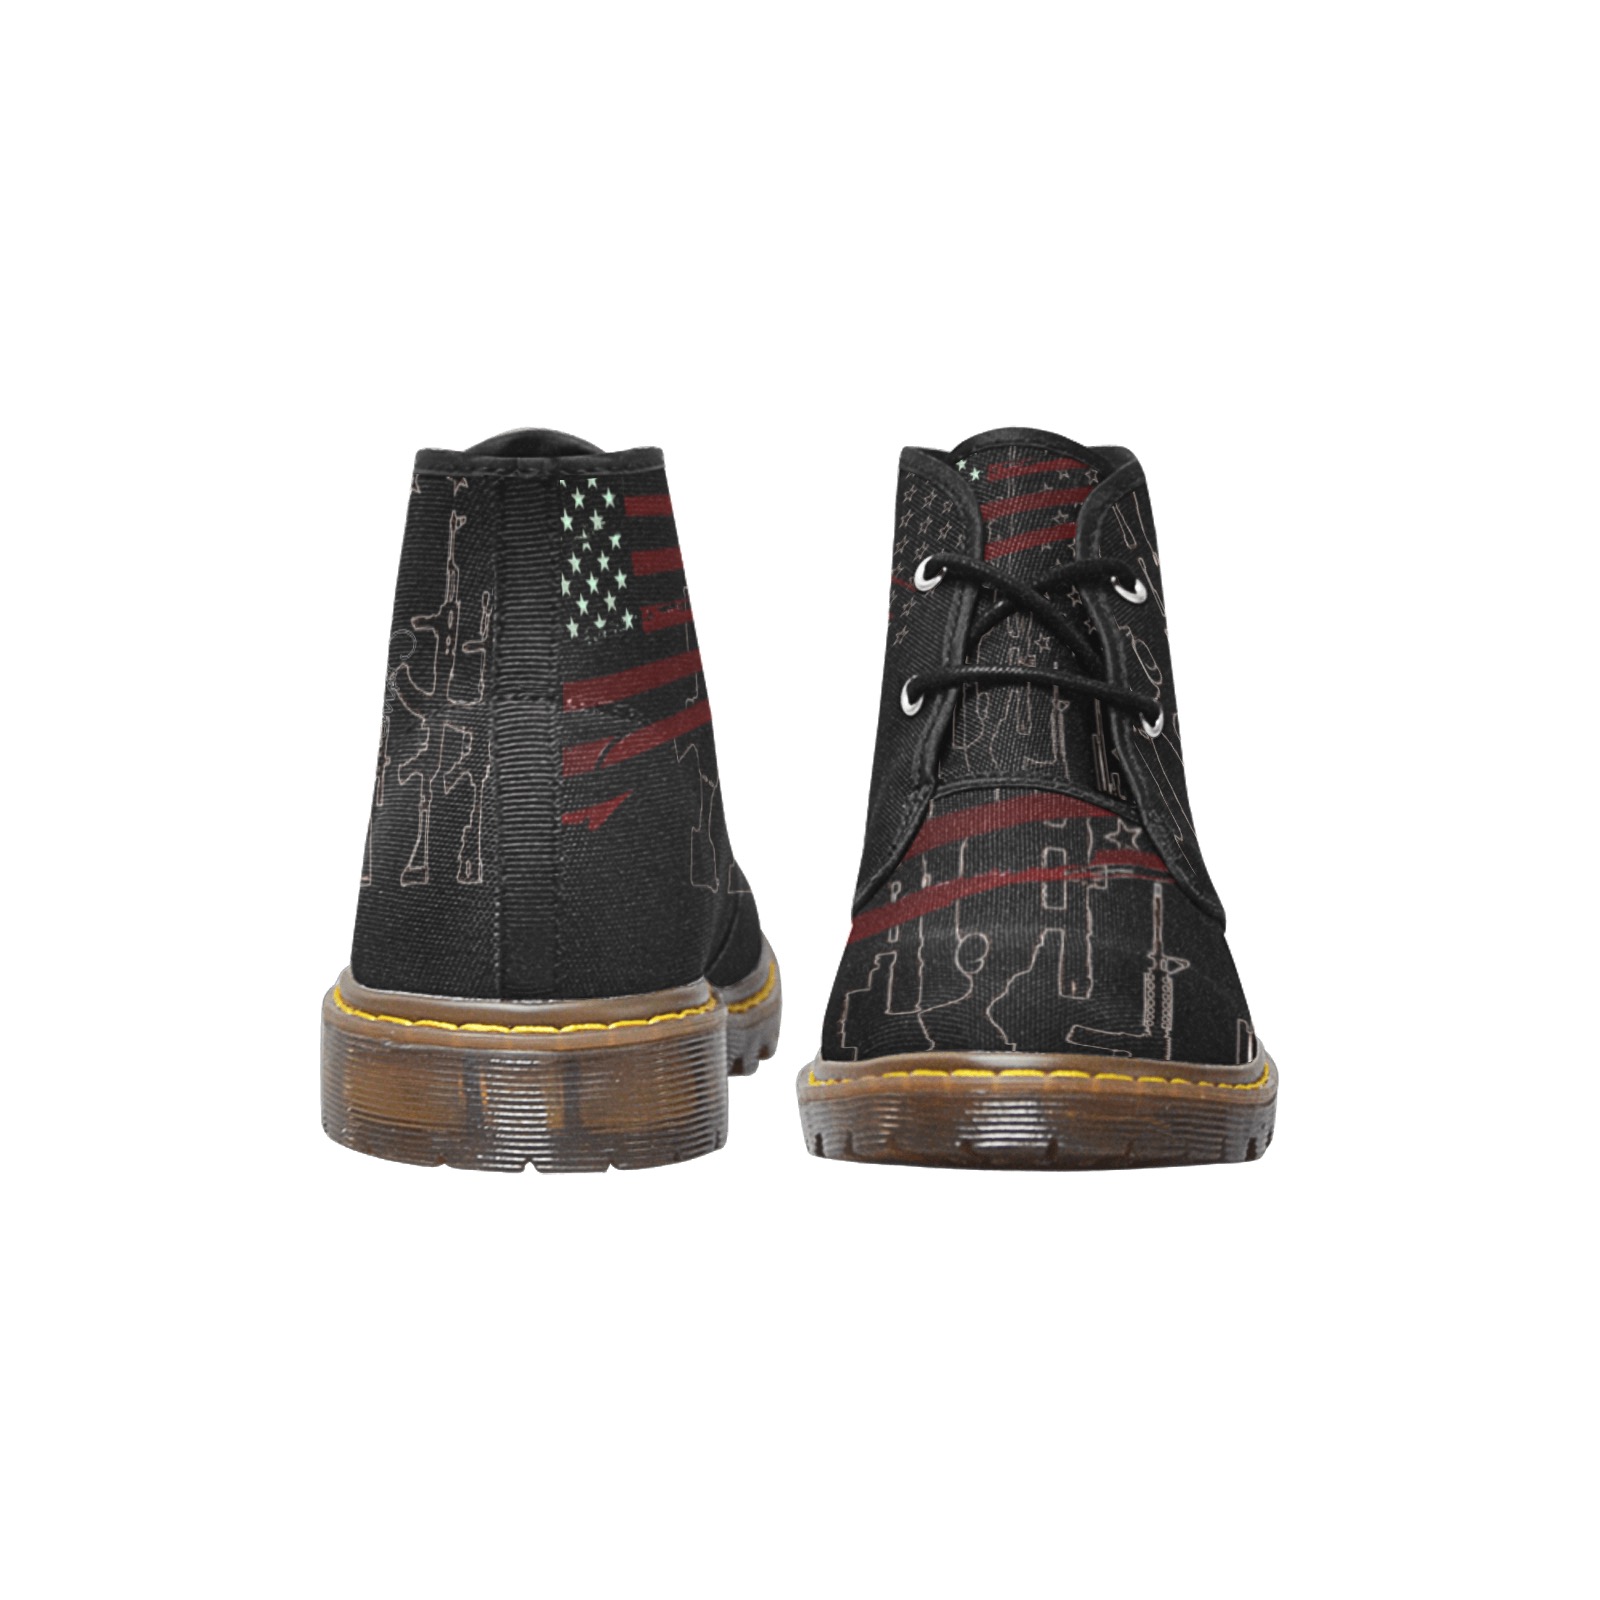 American strong print Men's Canvas Chukka Boots (Model 2402-1)